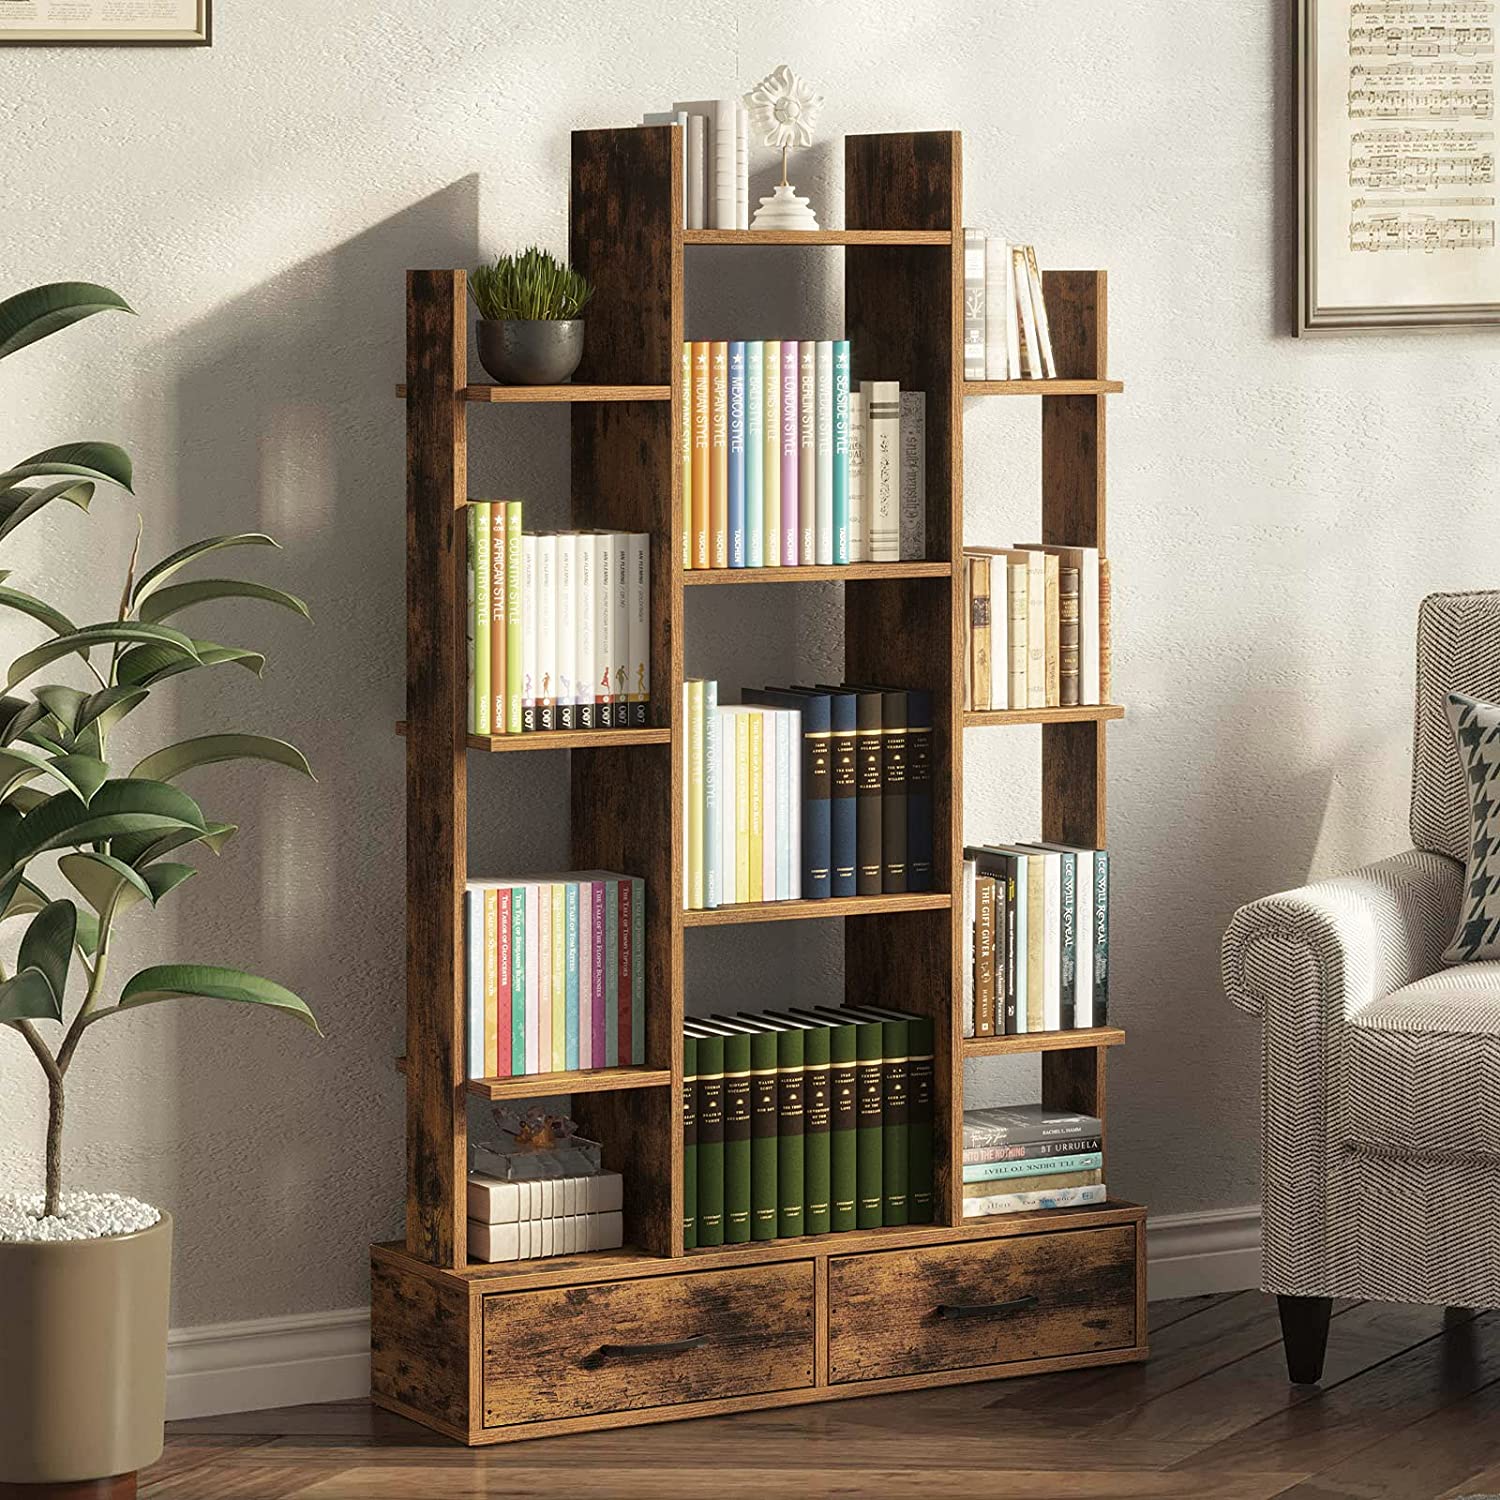 Bookshelf: Rustic Wood Bookshelves with 2 Wooden Drawers